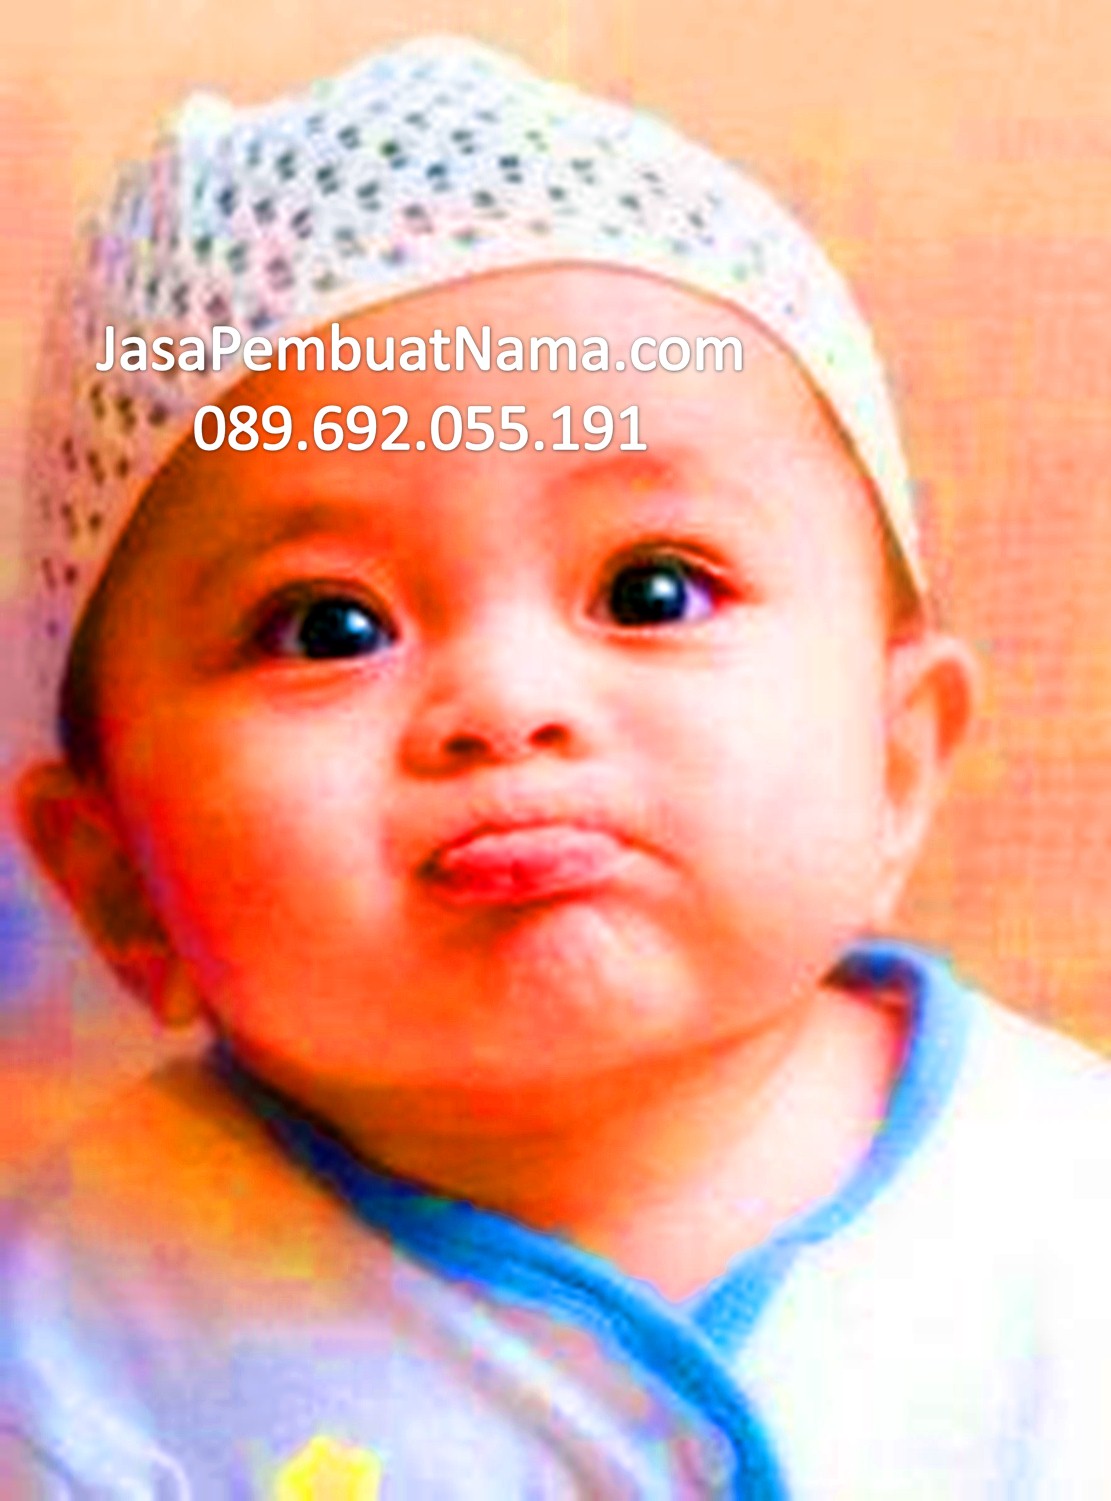 Gambar Anak Bayi Lucu Berhijab Terbaru Display Picture Update